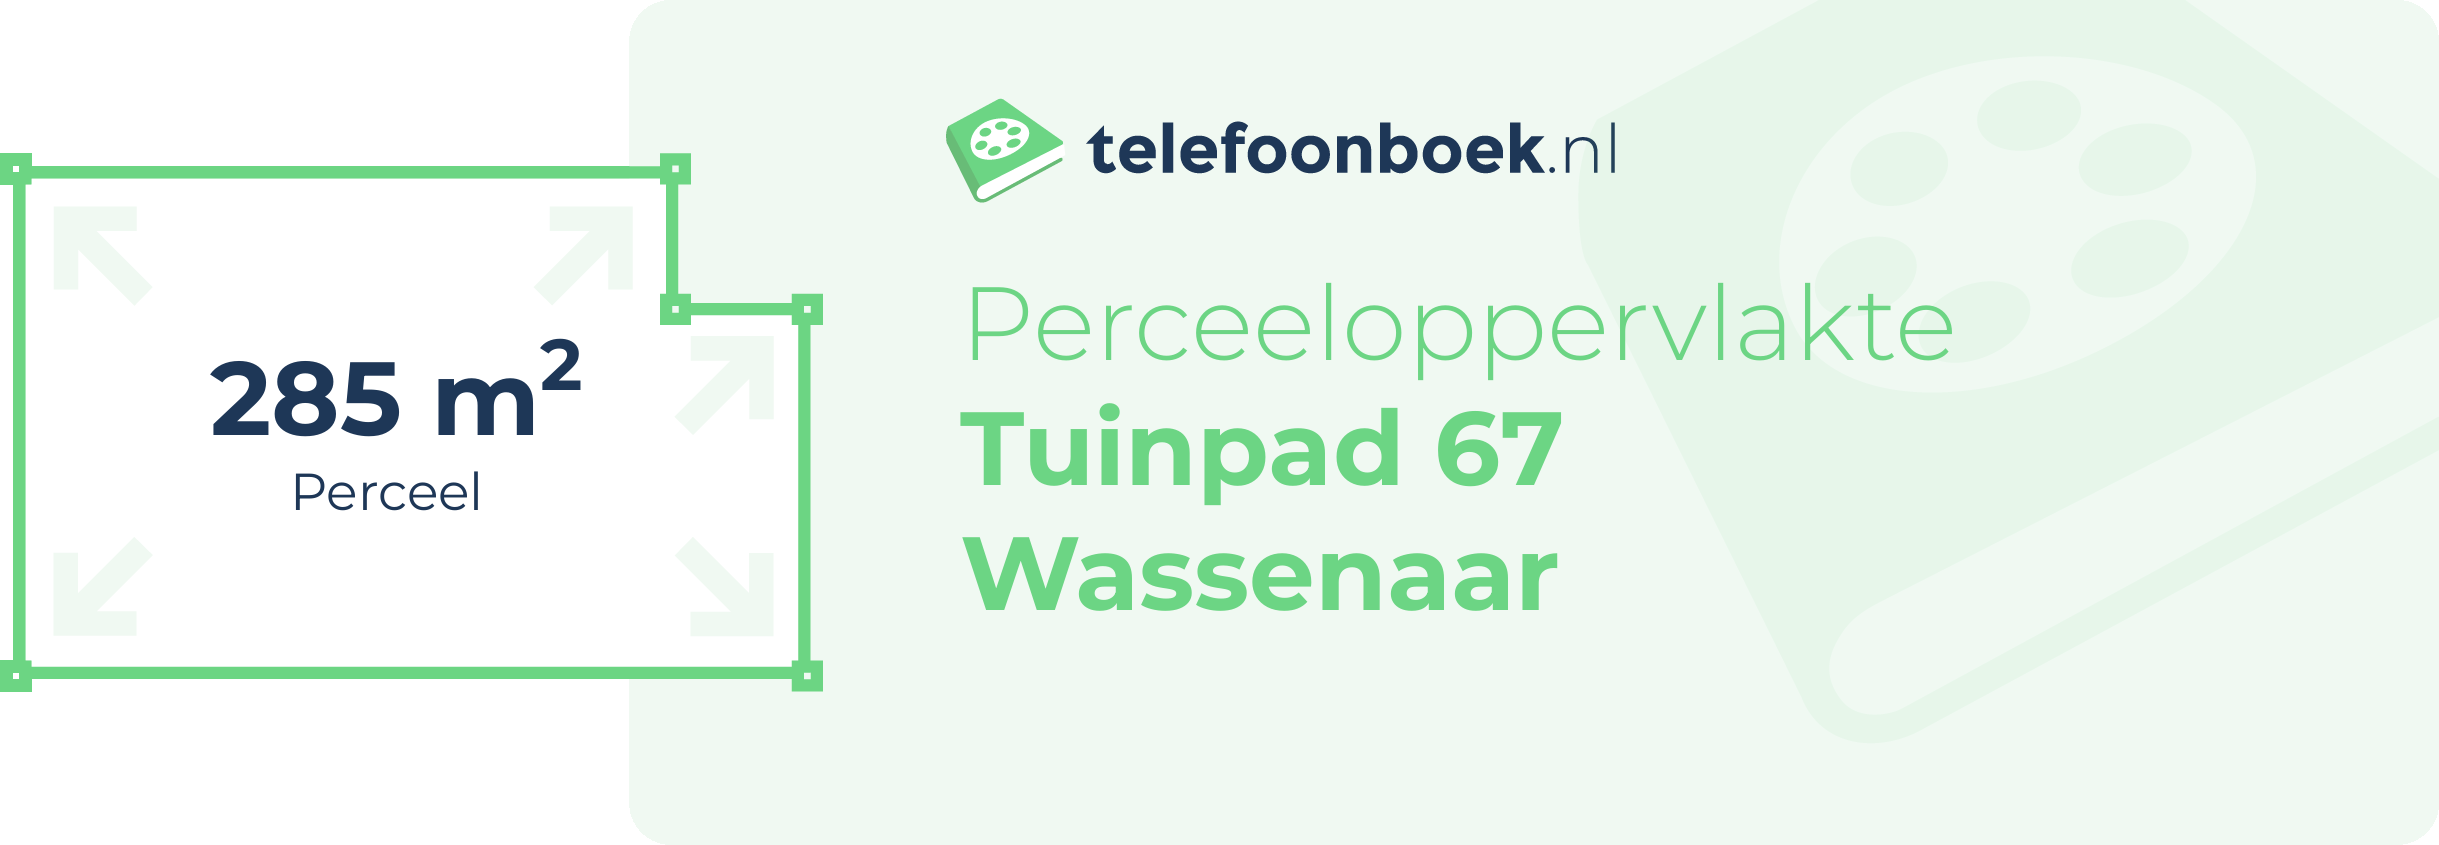 Perceeloppervlakte Tuinpad 67 Wassenaar